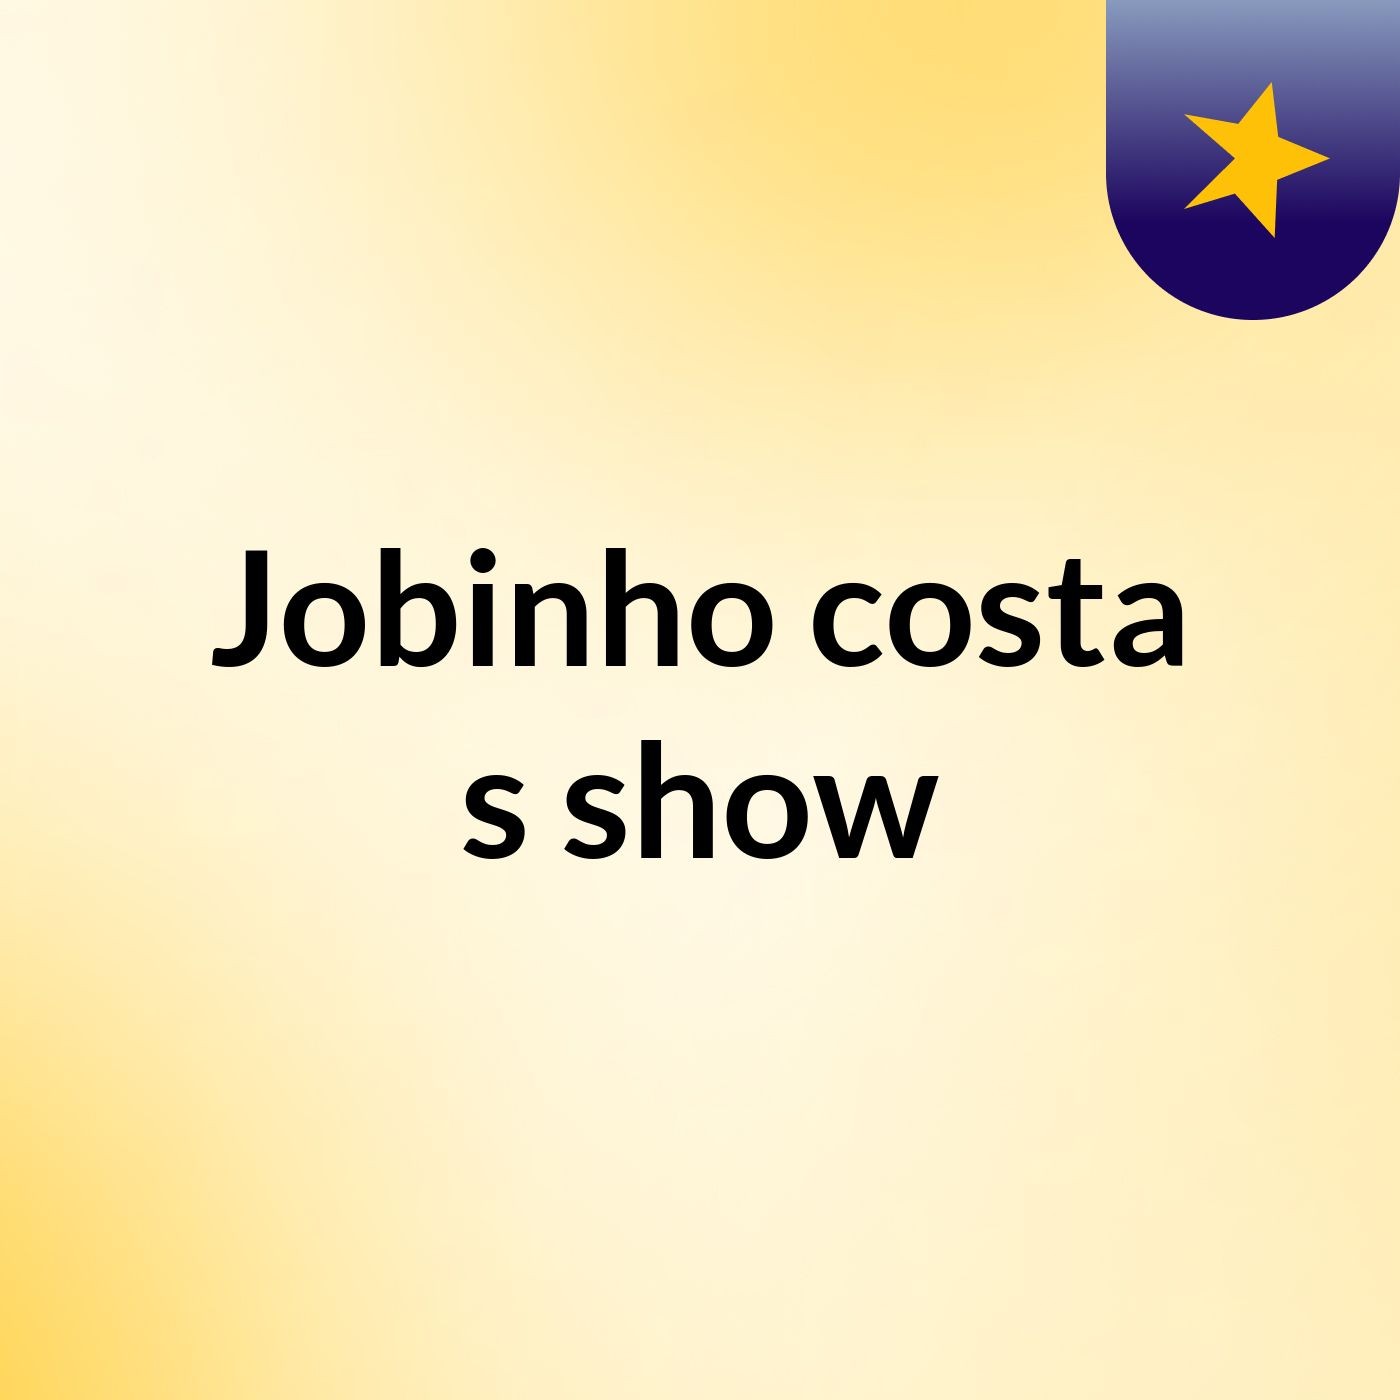 Jobinho costa's show